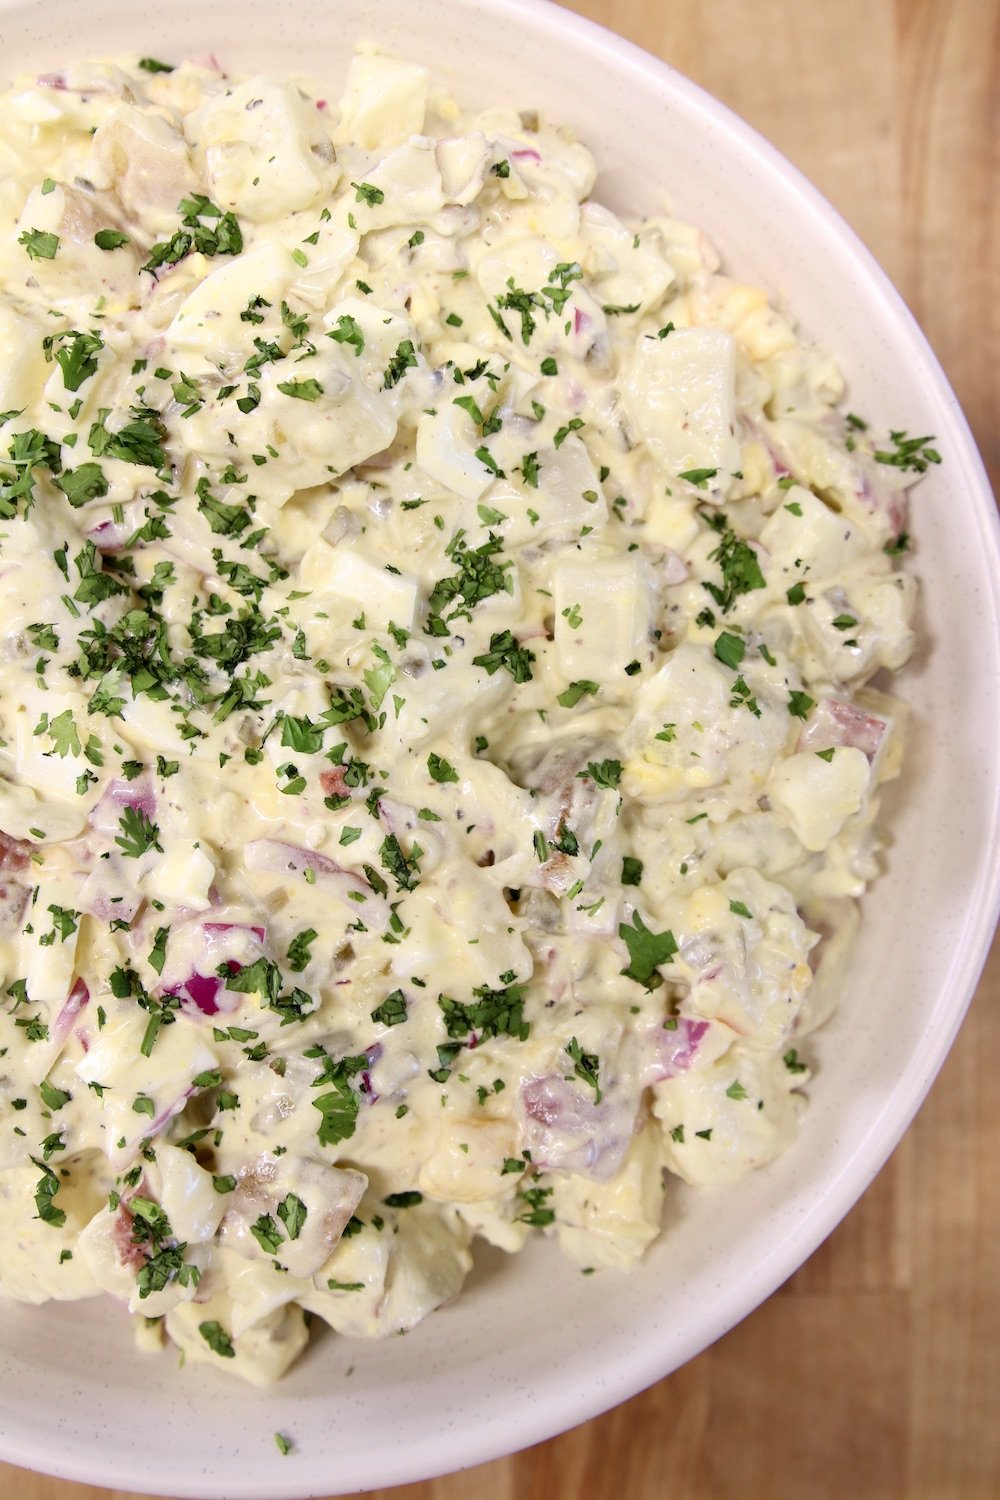 Bowl of potato salad with parsley garnish